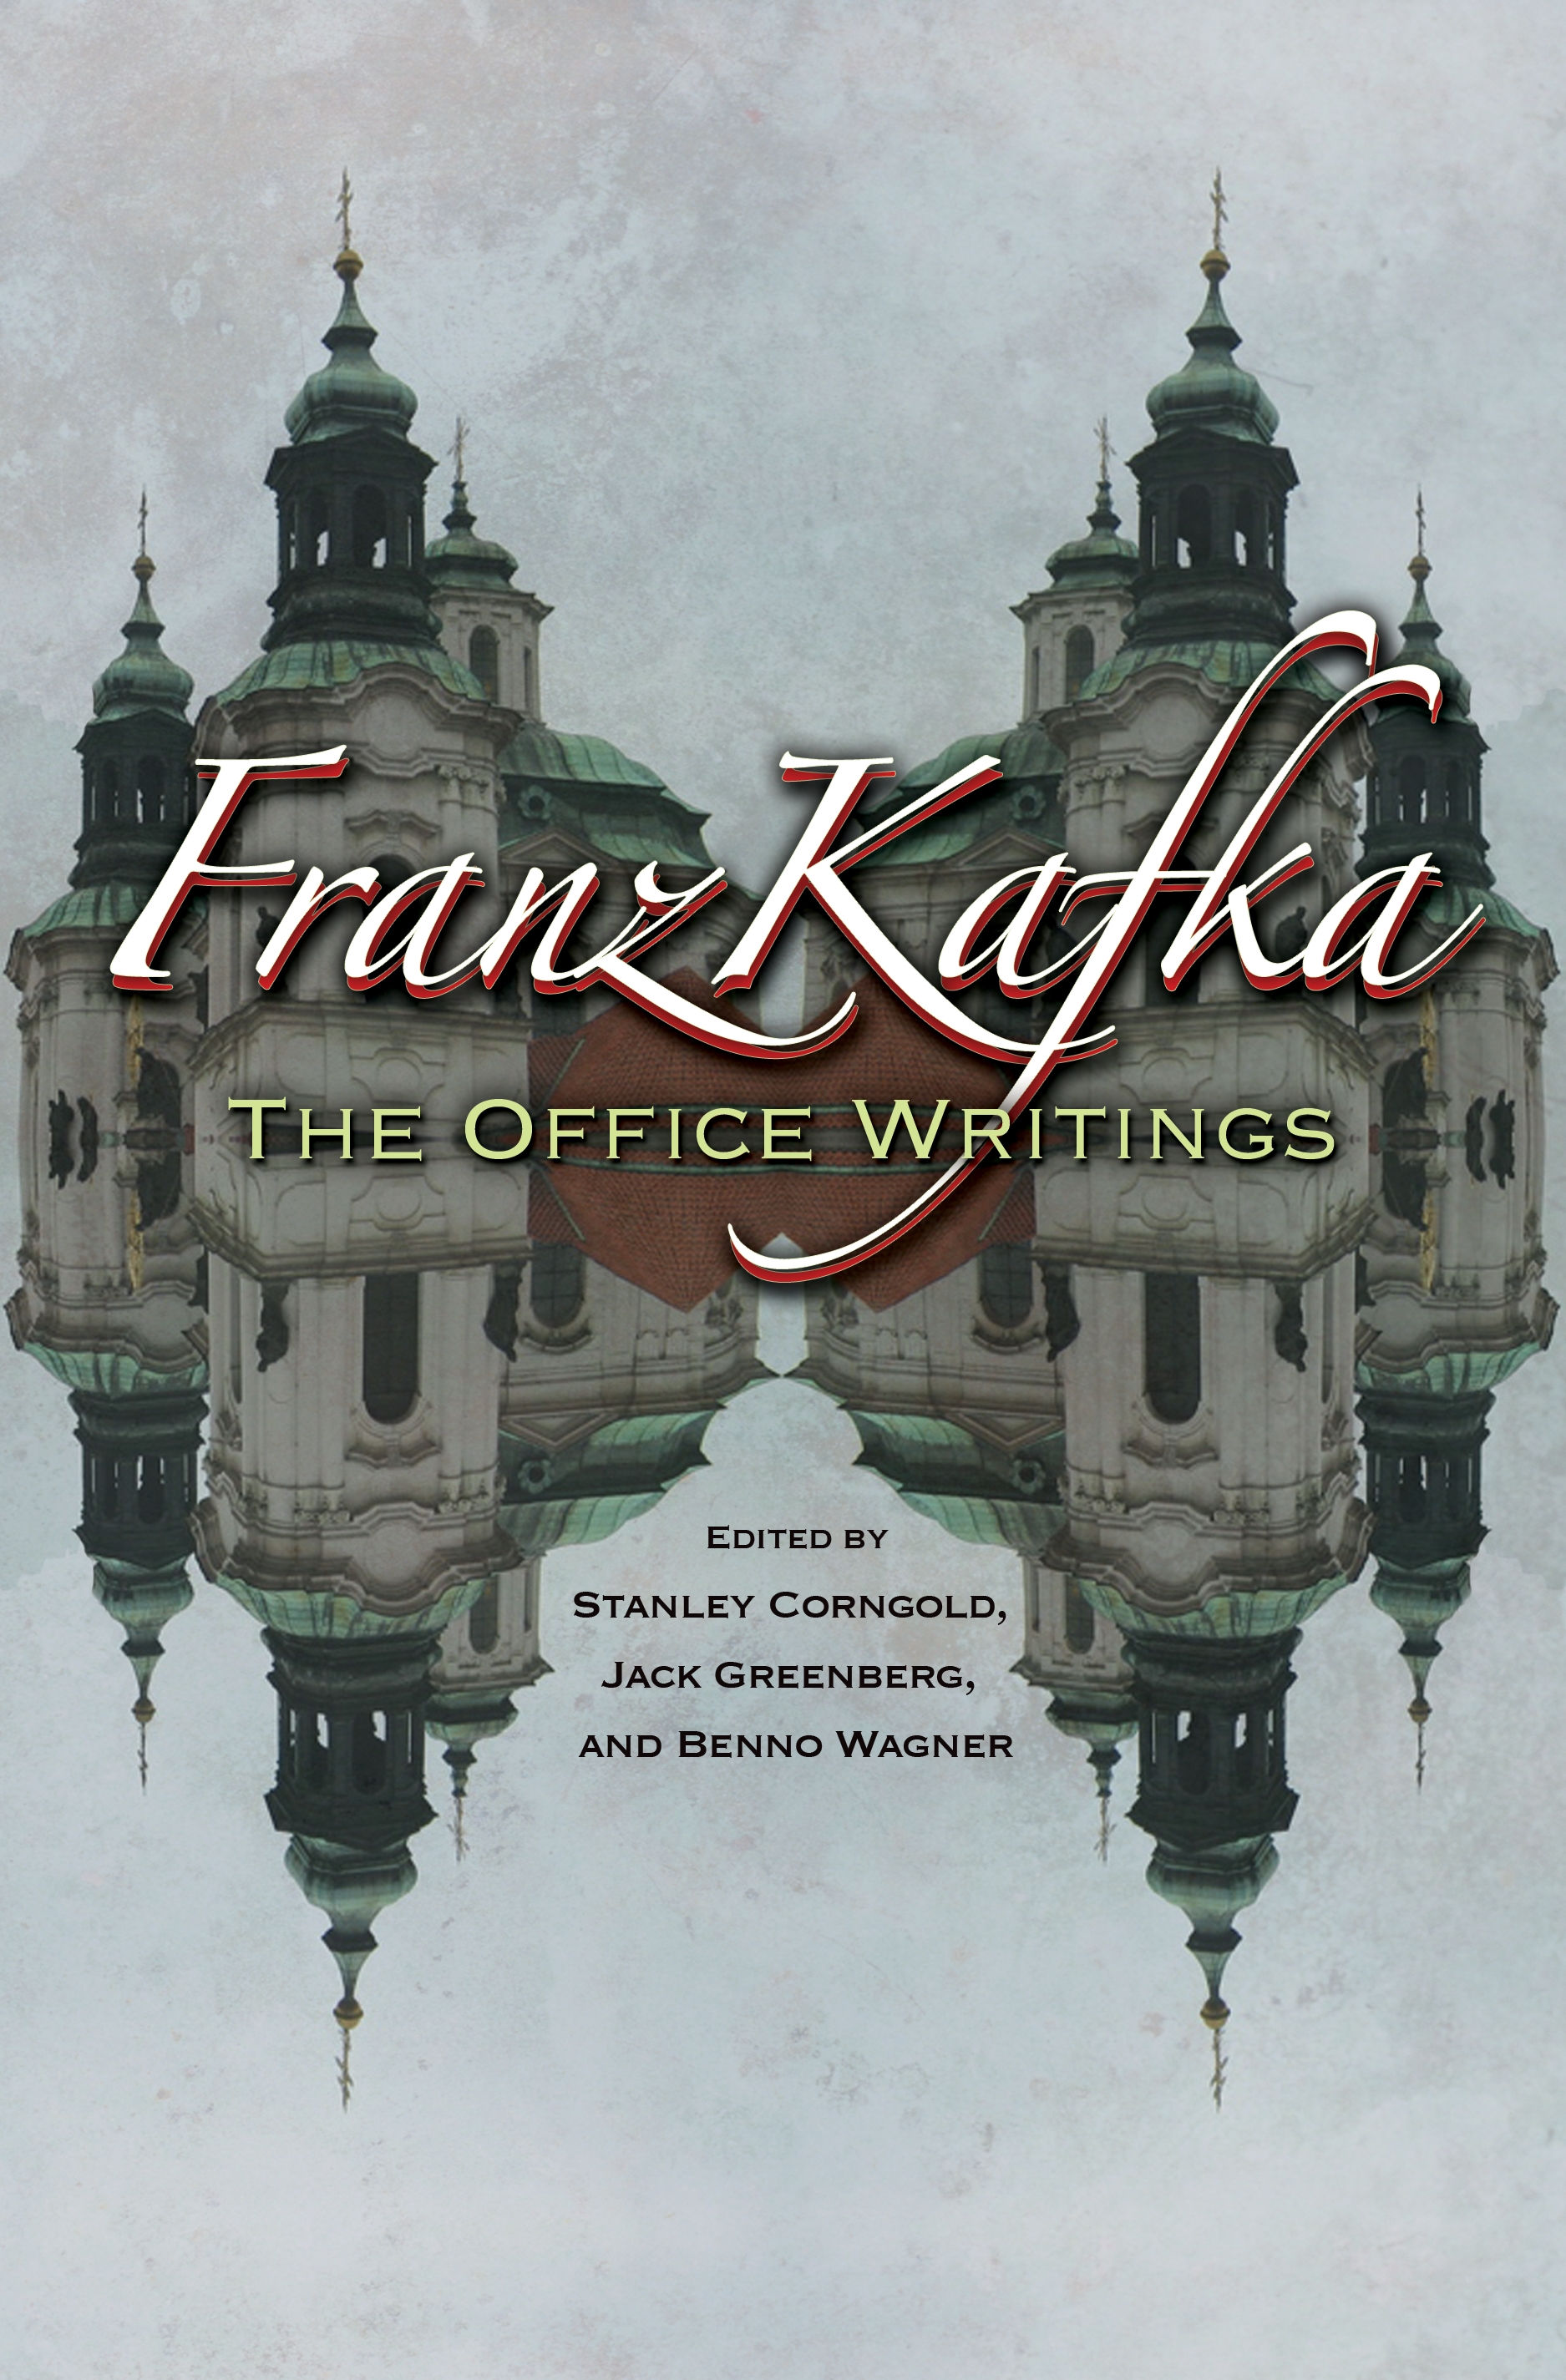 Franz Kafka: Collected Works by Franz Kafka